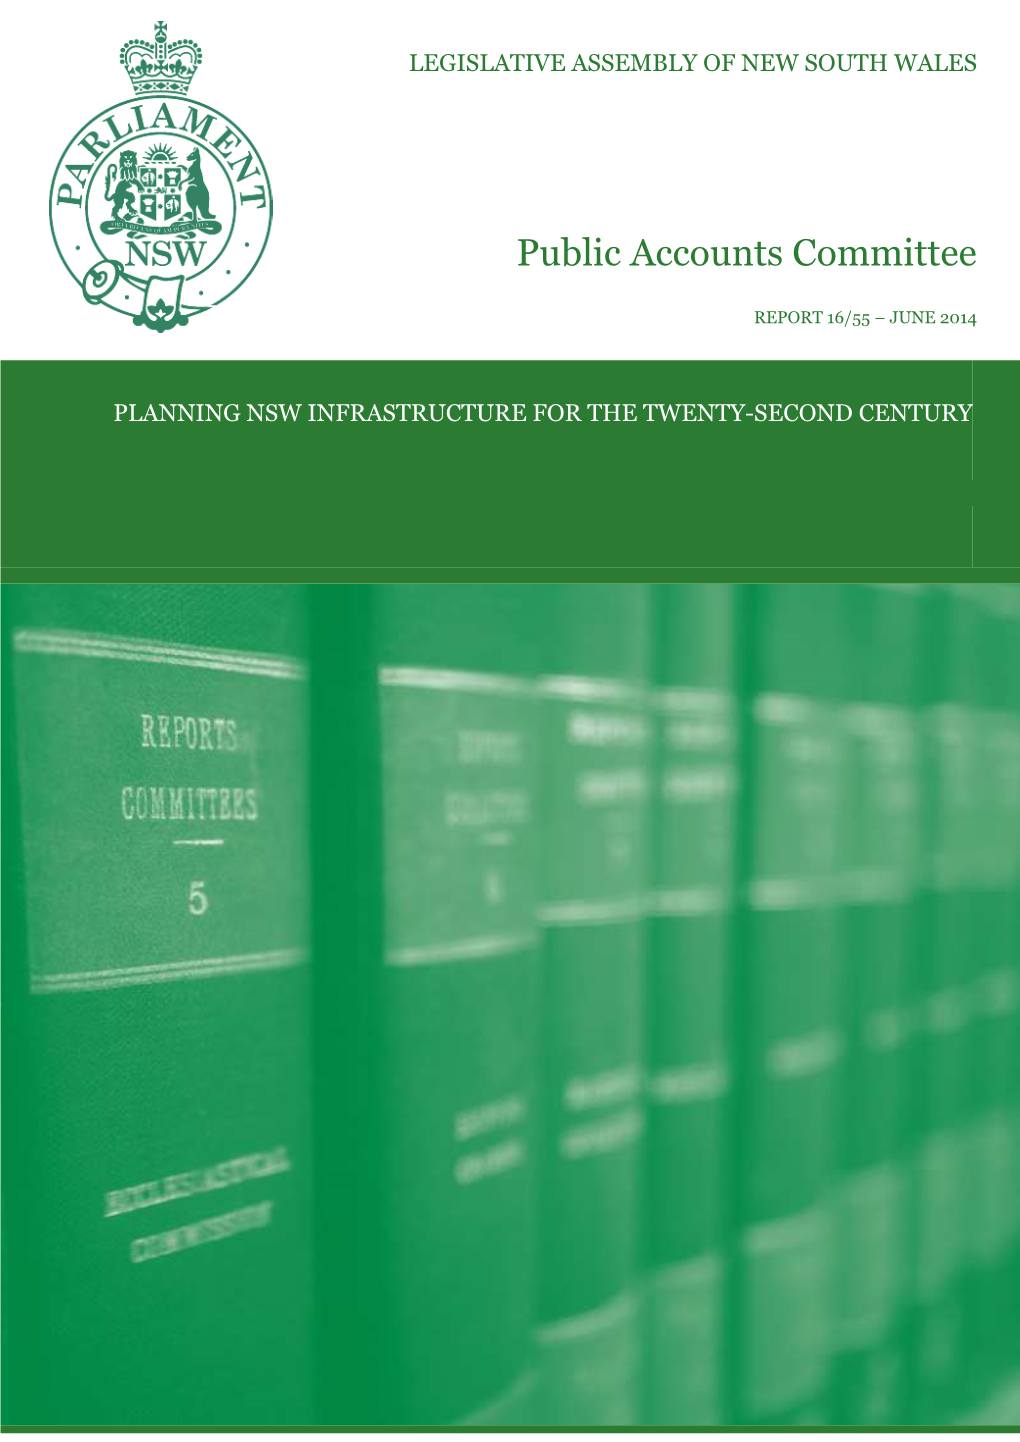 Public Accounts Committee